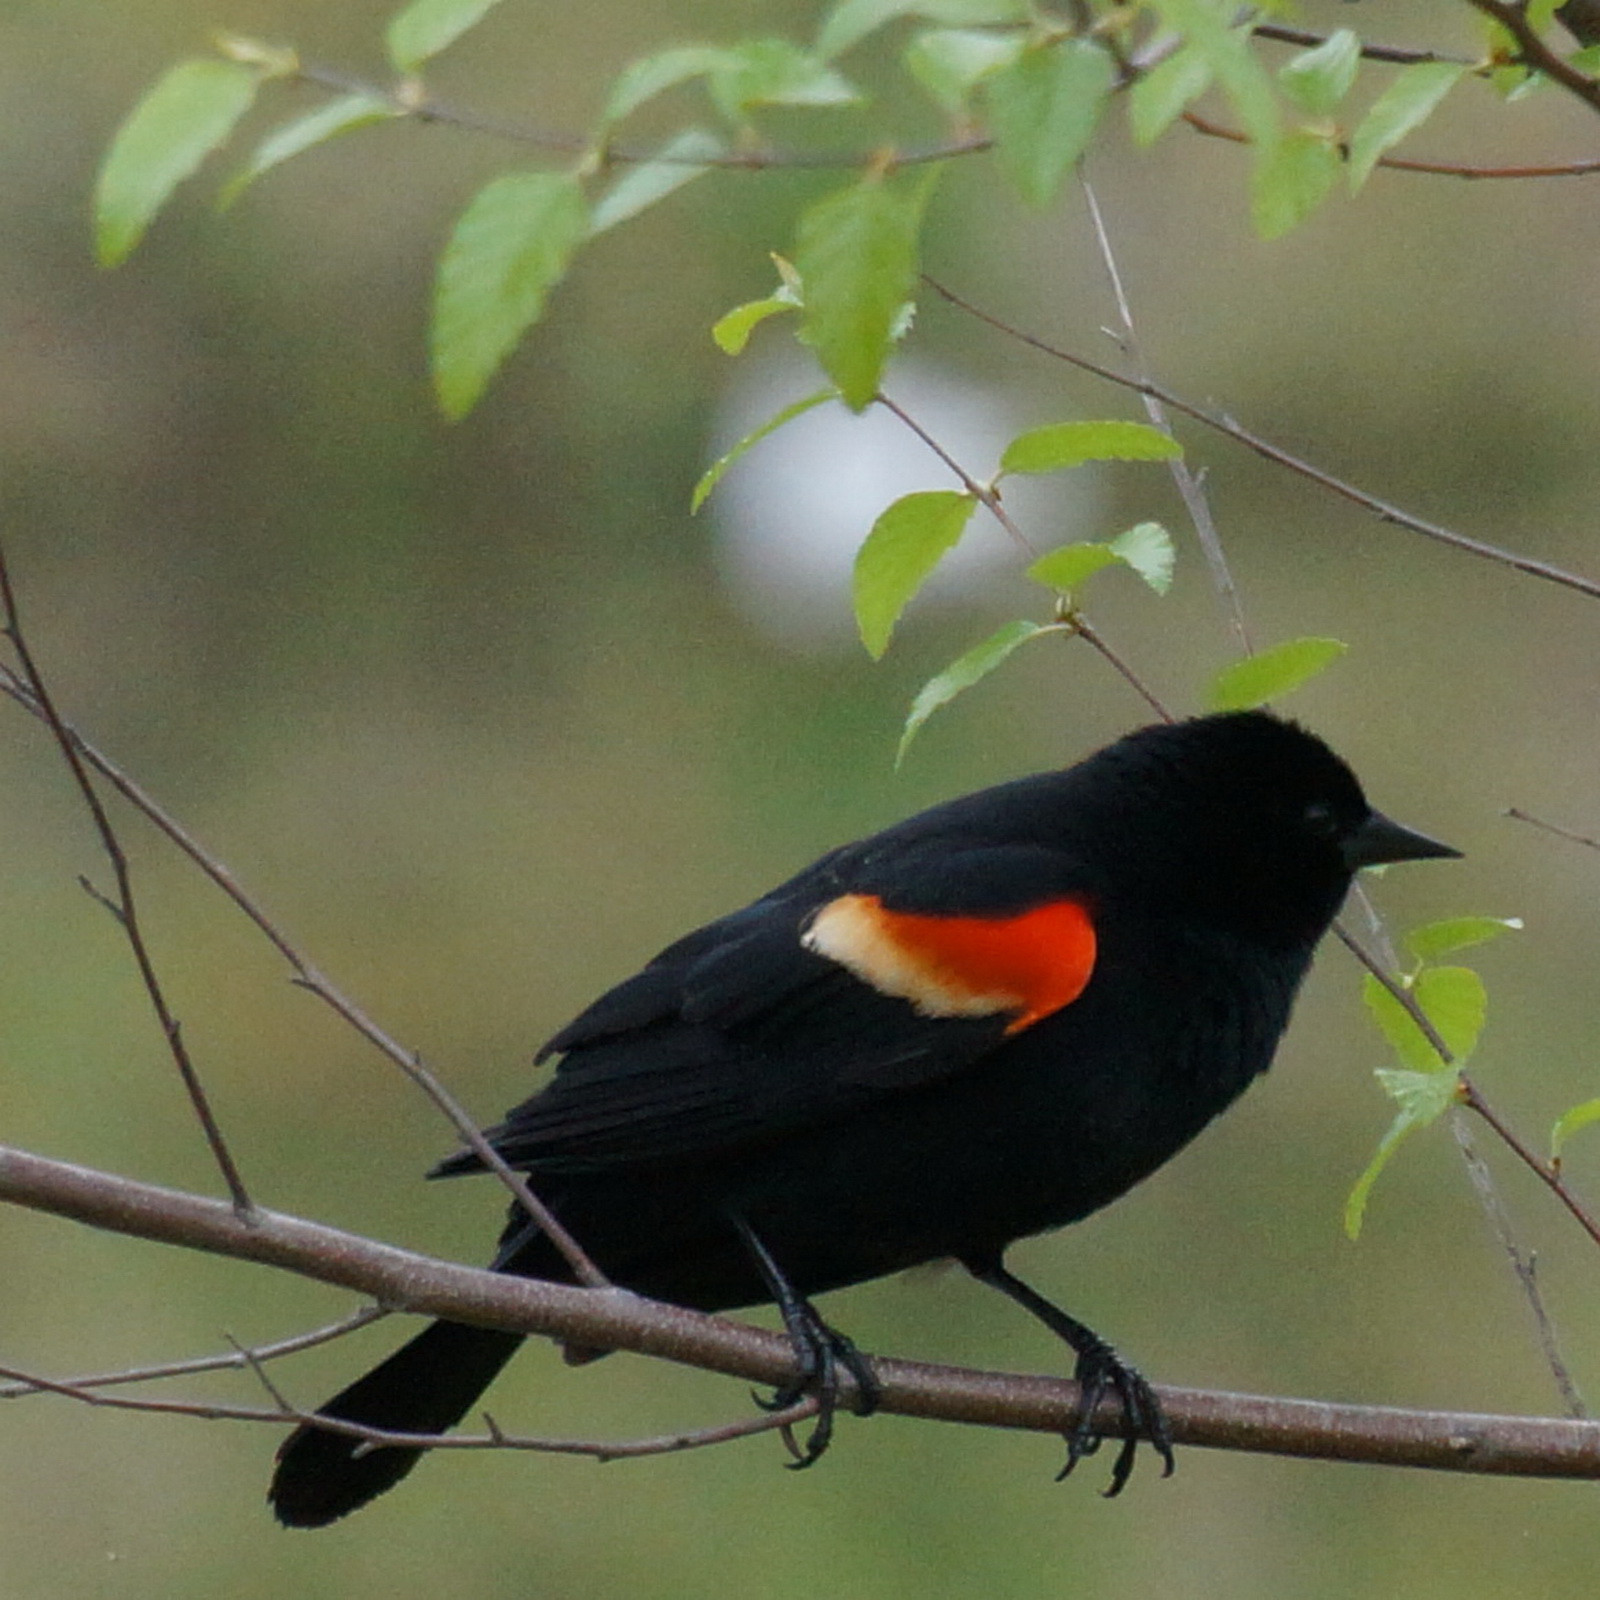 Redwing blackbird close_resize.jpg